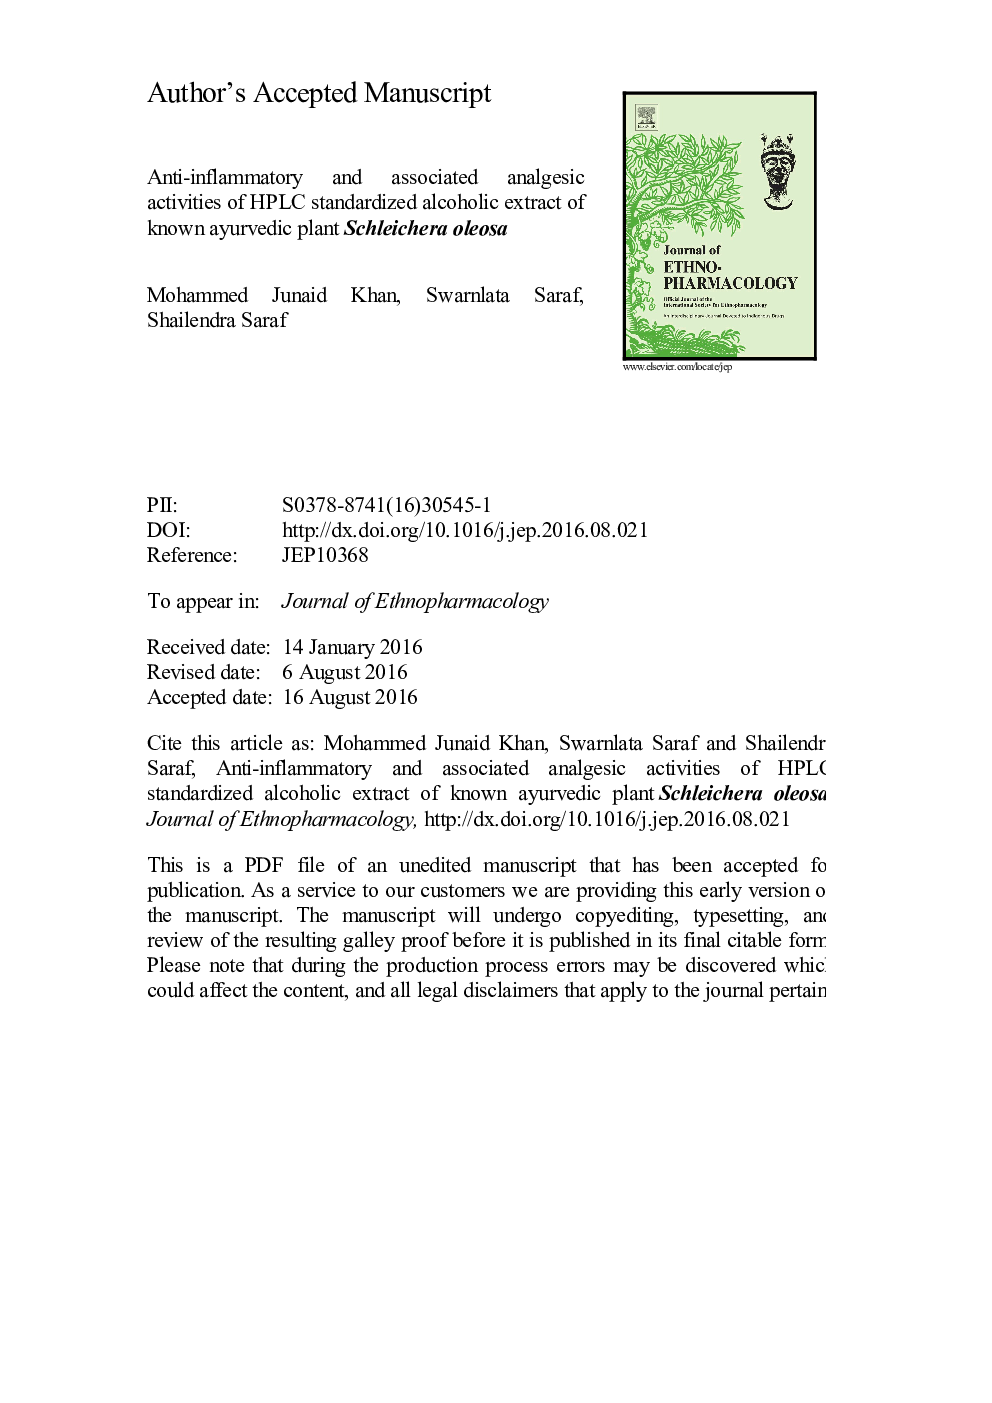 Anti-inflammatory and associated analgesic activities of HPLC standardized alcoholic extract of known ayurvedic plant Schleichera oleosa